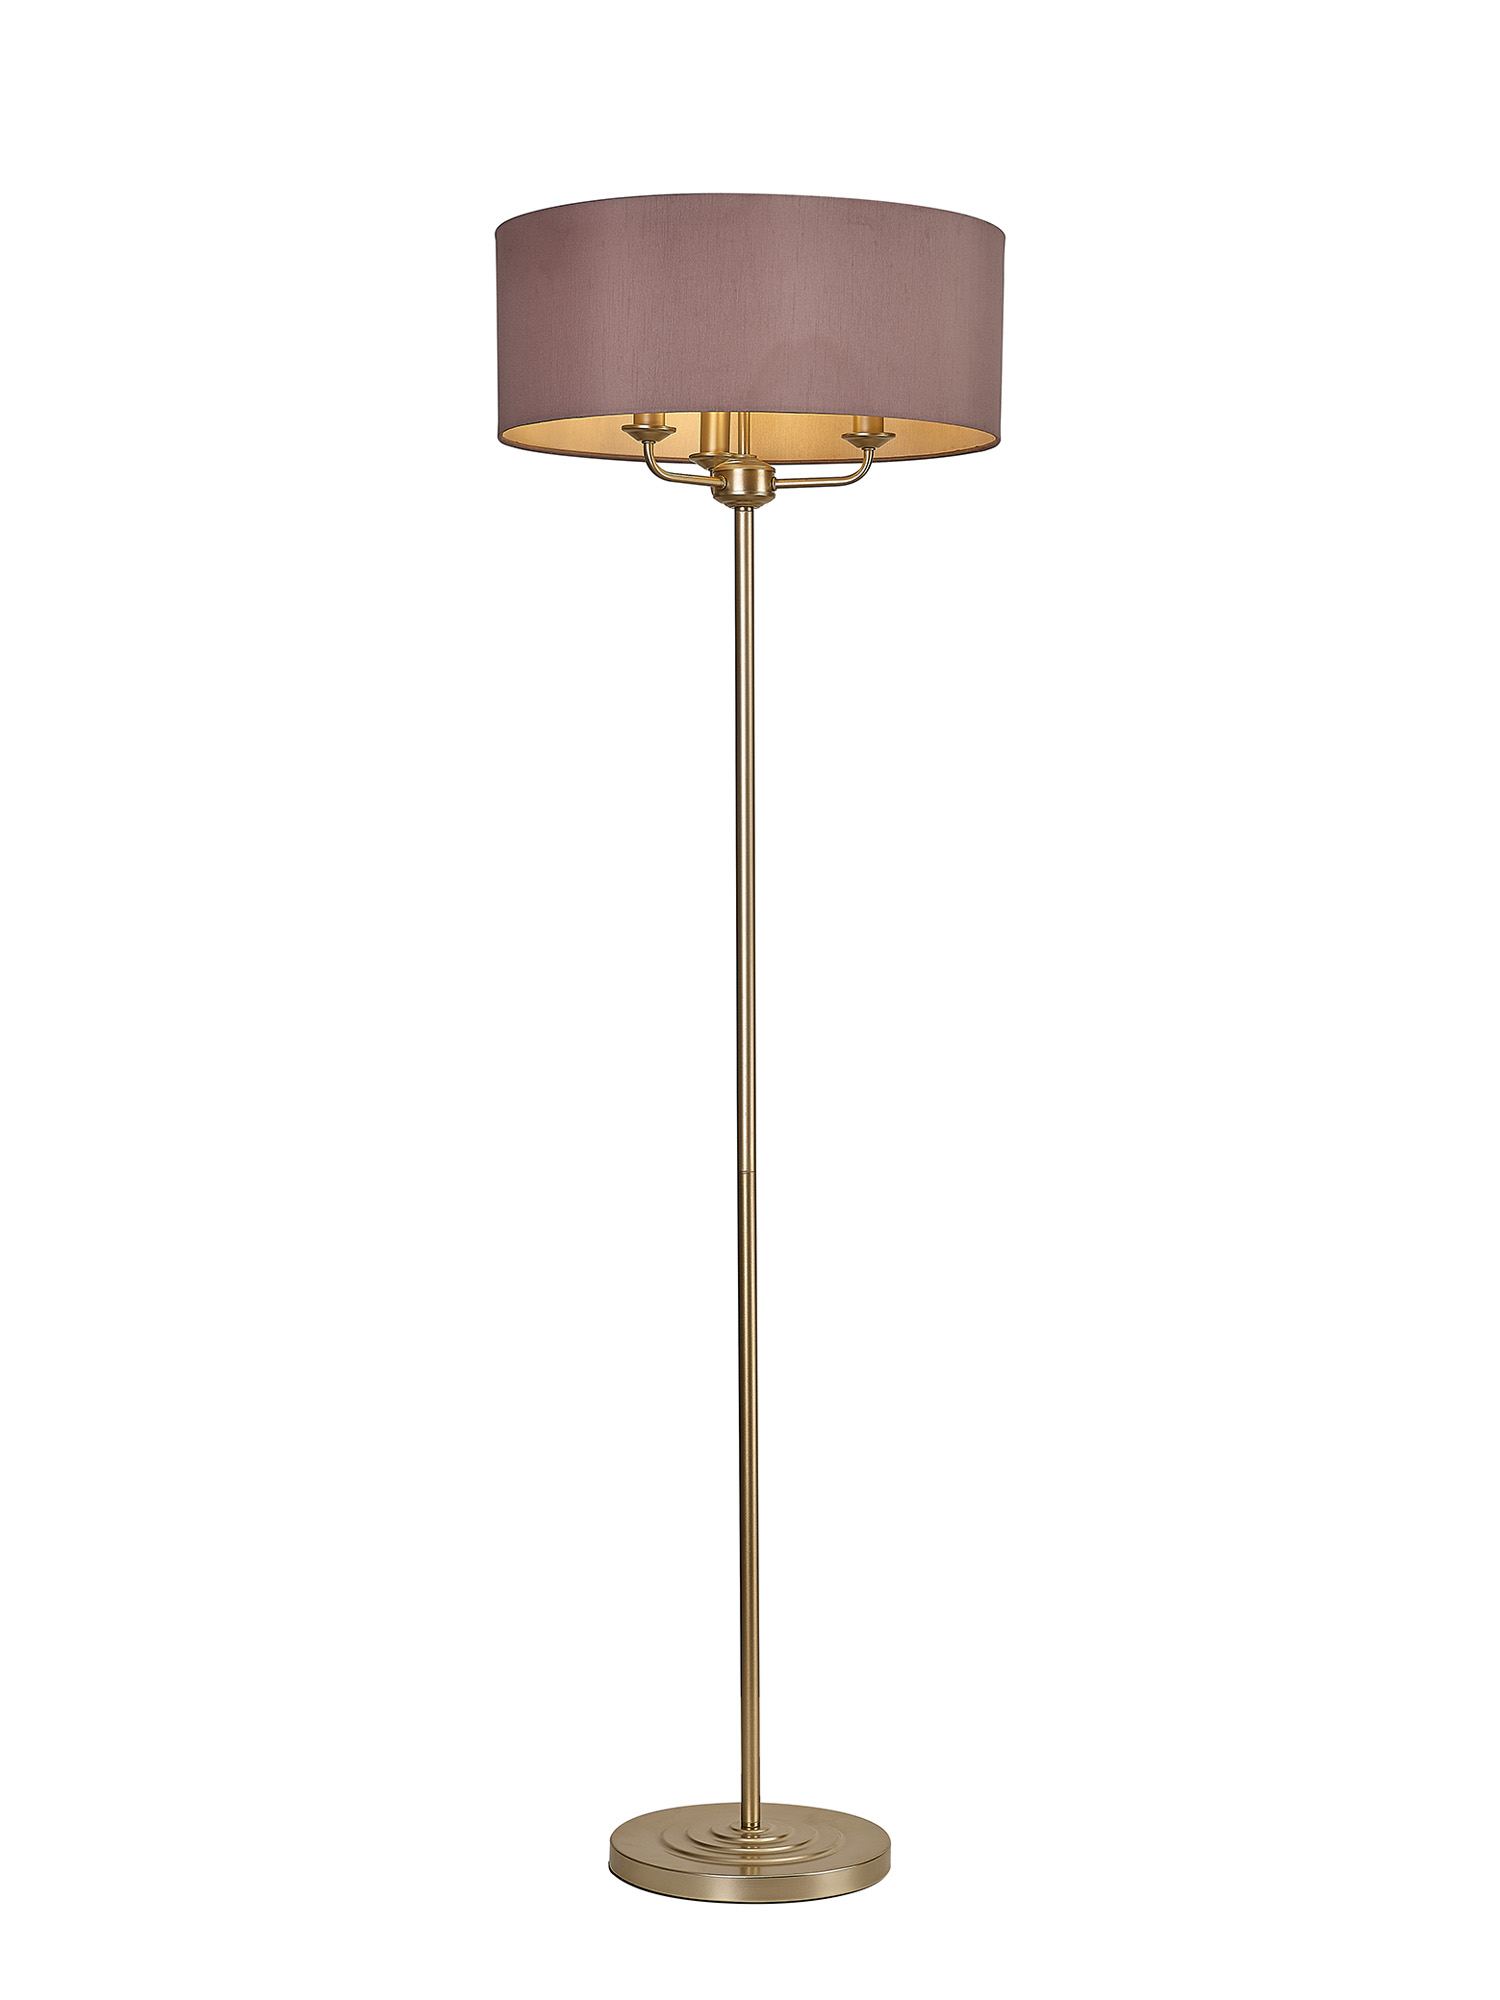 DK1004  Banyan 45cm 3 Light Floor Lamp Champagne Gold; Taupe